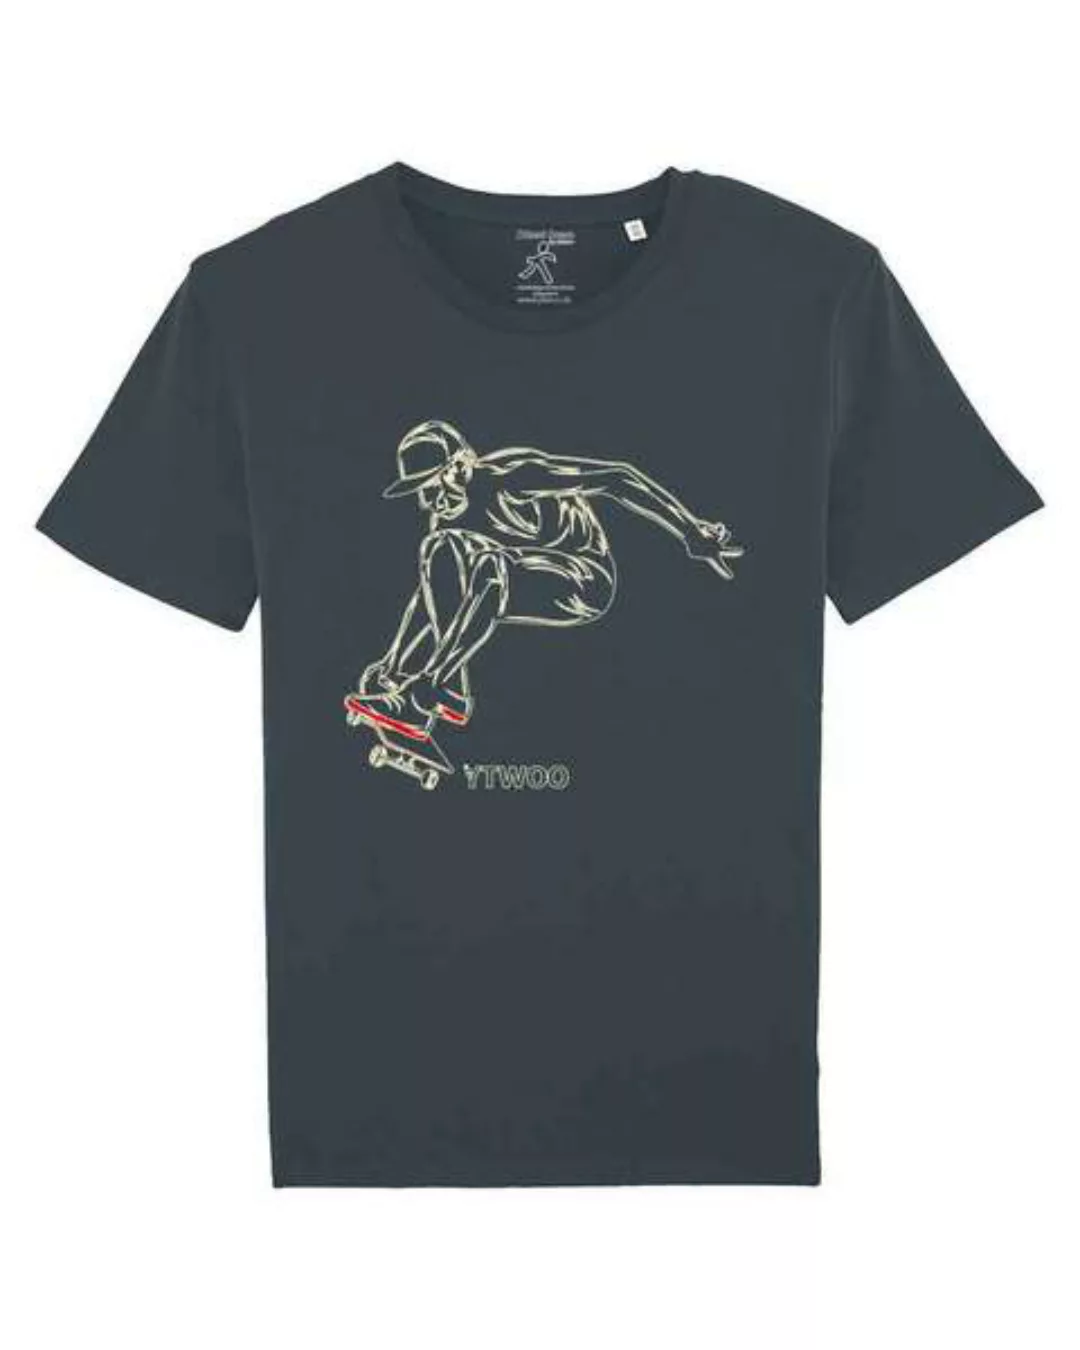 Skate For Live, Herren T-shirt Mit Skater Als Motiv. Skater Bio Shirt günstig online kaufen